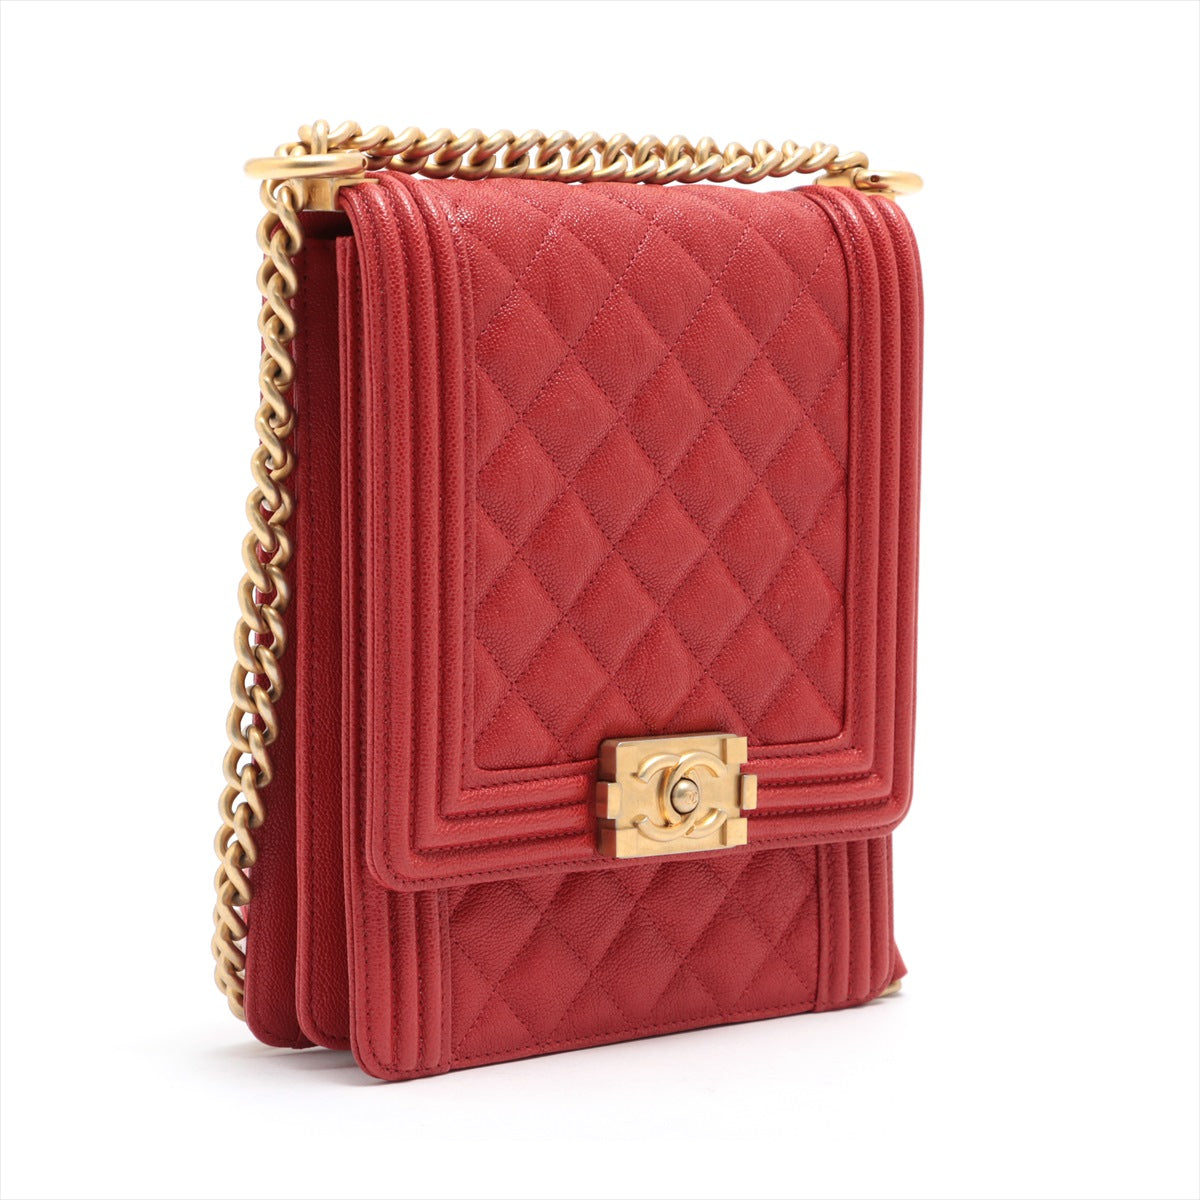 Chanel Boy Chanel Caviar Skin Chain Shoulder Bag Red Gold Metal Fittings 26XXXXXX AS0130